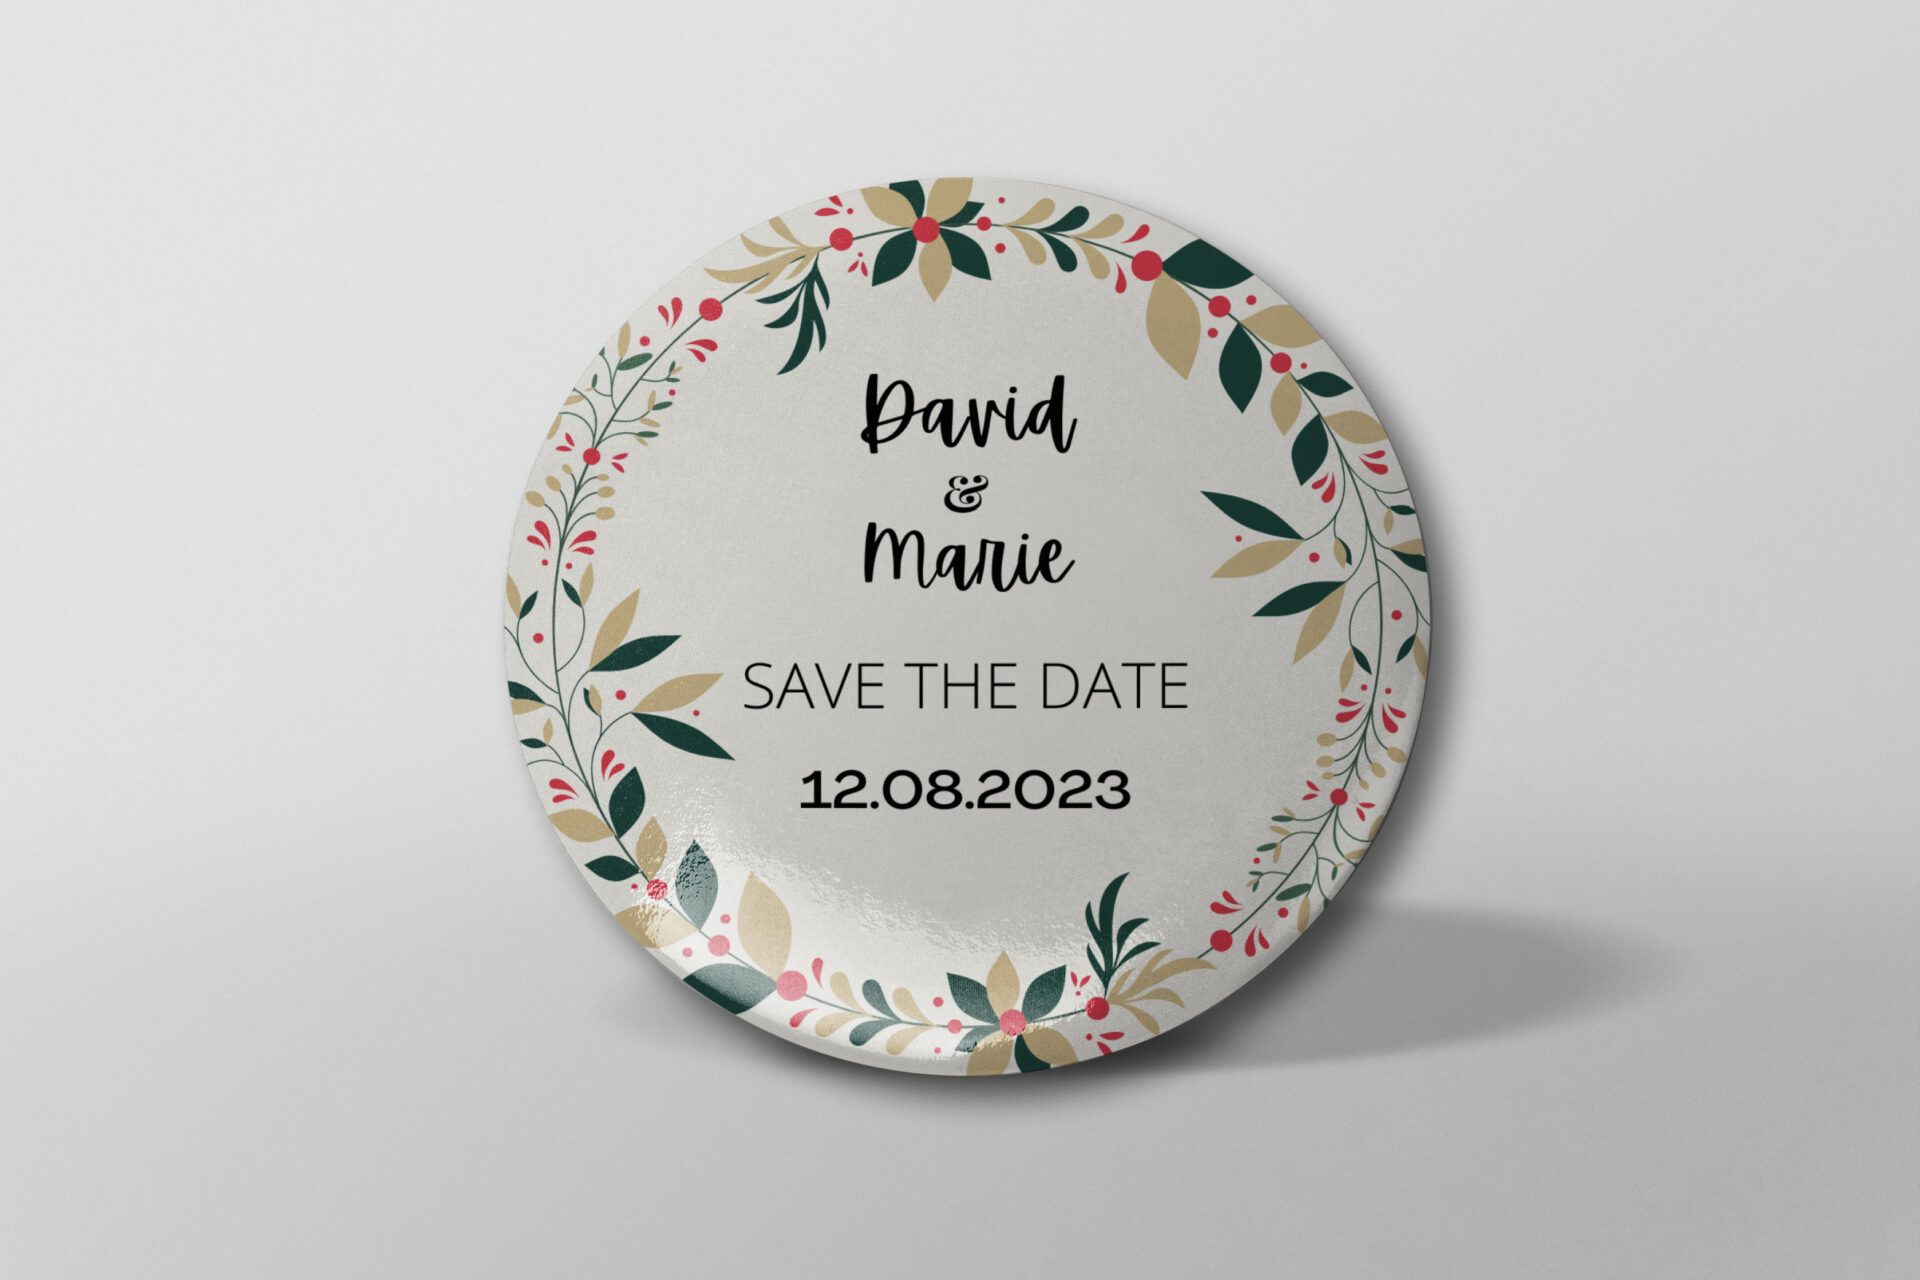 Vente badges - Save the date - badge invitation badge mariage invités